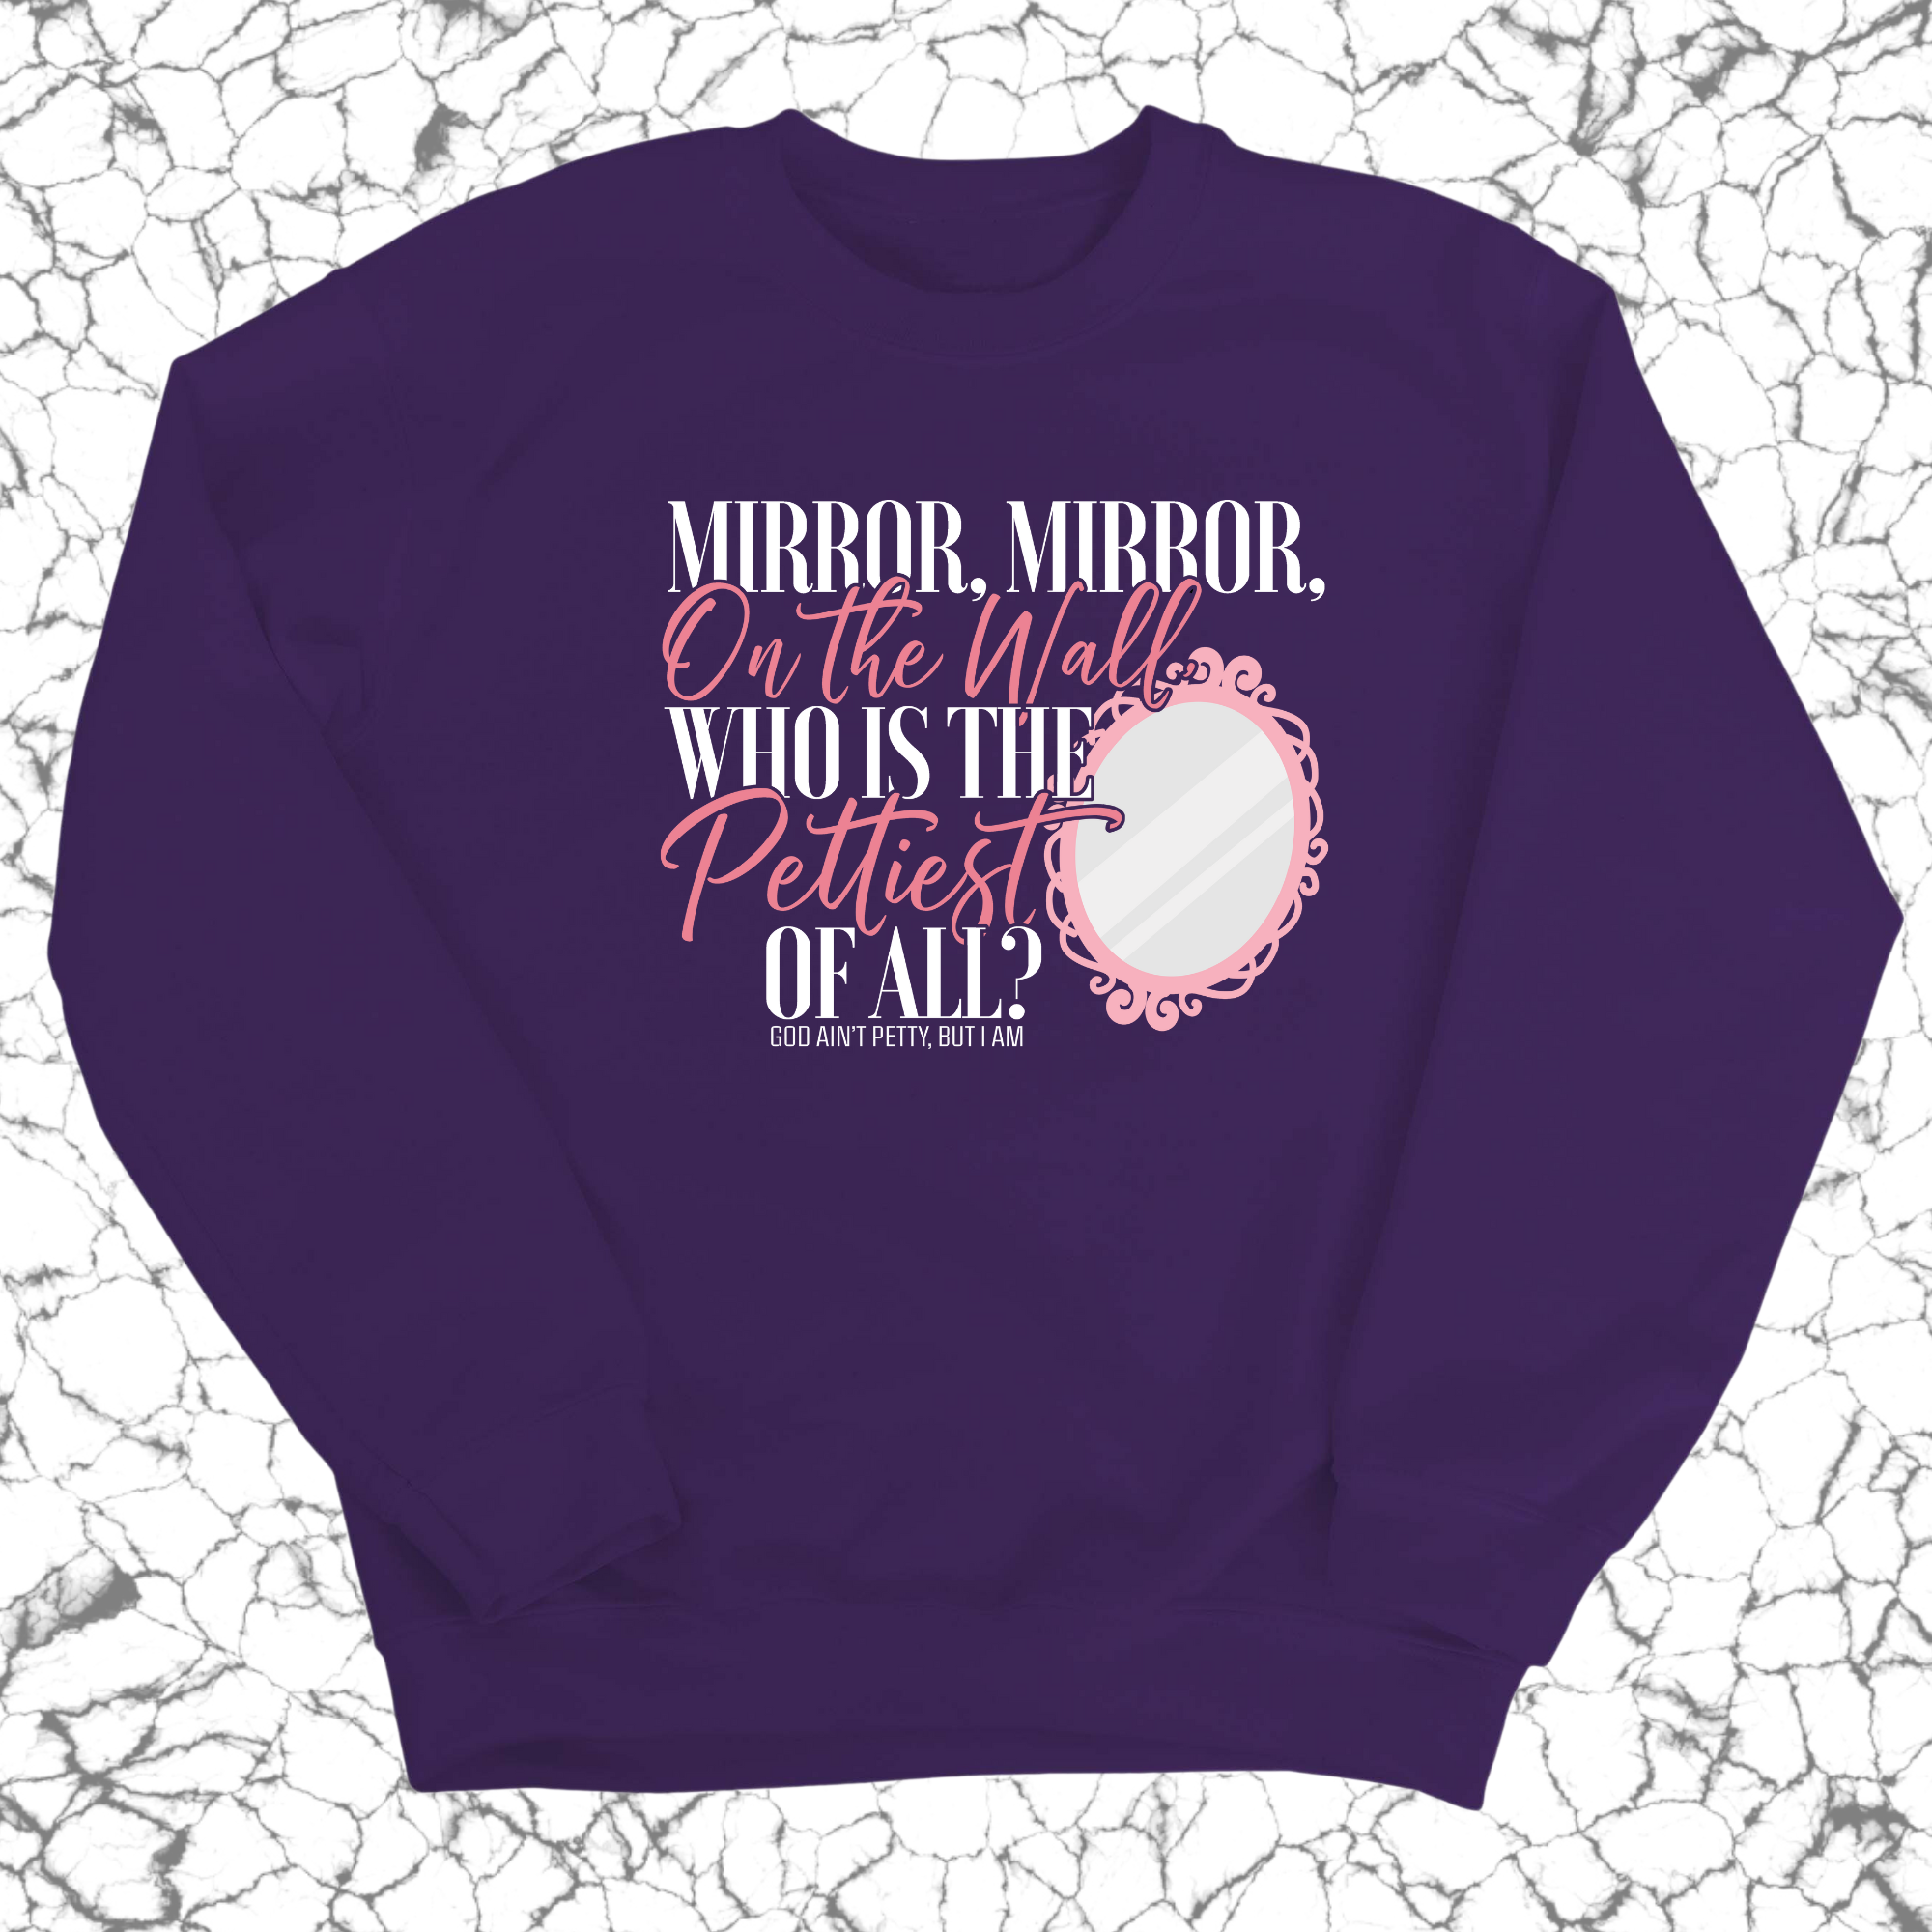 Mirror Mirror on the Wall, Who is the Pettiest of All Unisex Sweatshirt-Sweatshirt-The Original God Ain't Petty But I Am